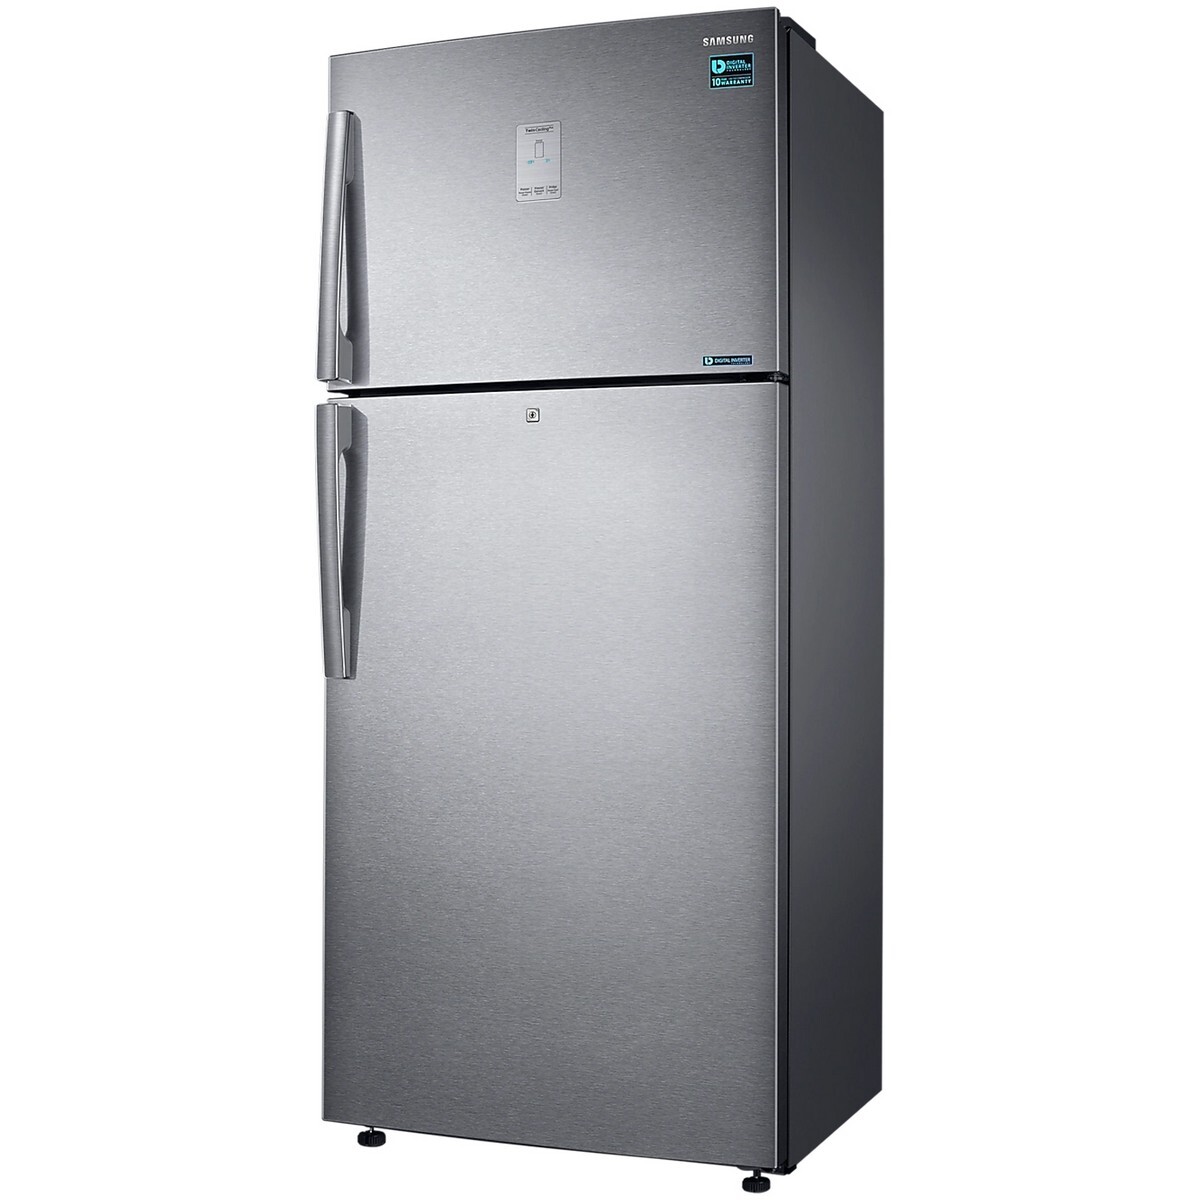 Samsung Frost Free Double Door Refrigerator RT56B6378SL 551 Ltr